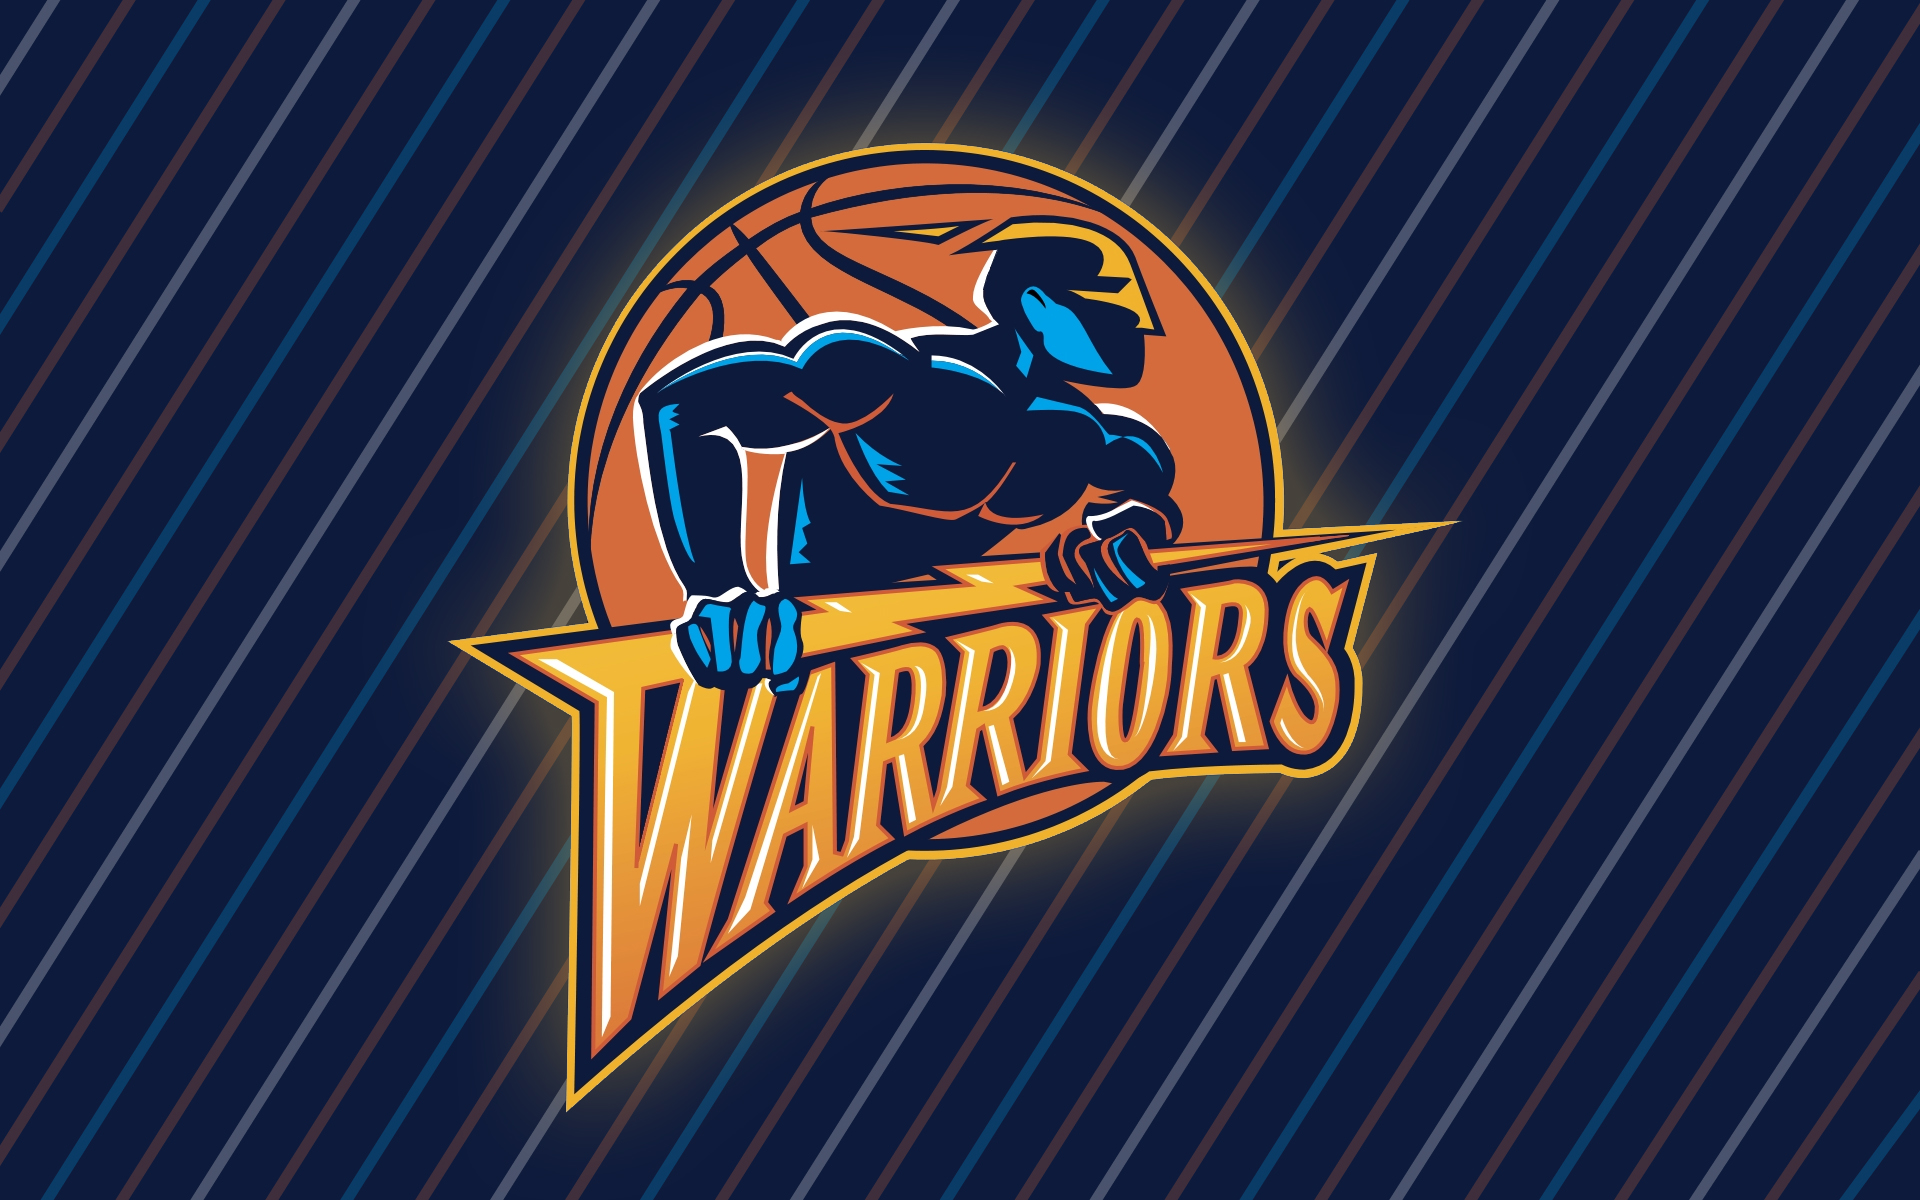 GOLDEN STATE WARRIORS Nba Basketball retro logo Wallpaper HD / Desktop and Mobile Background